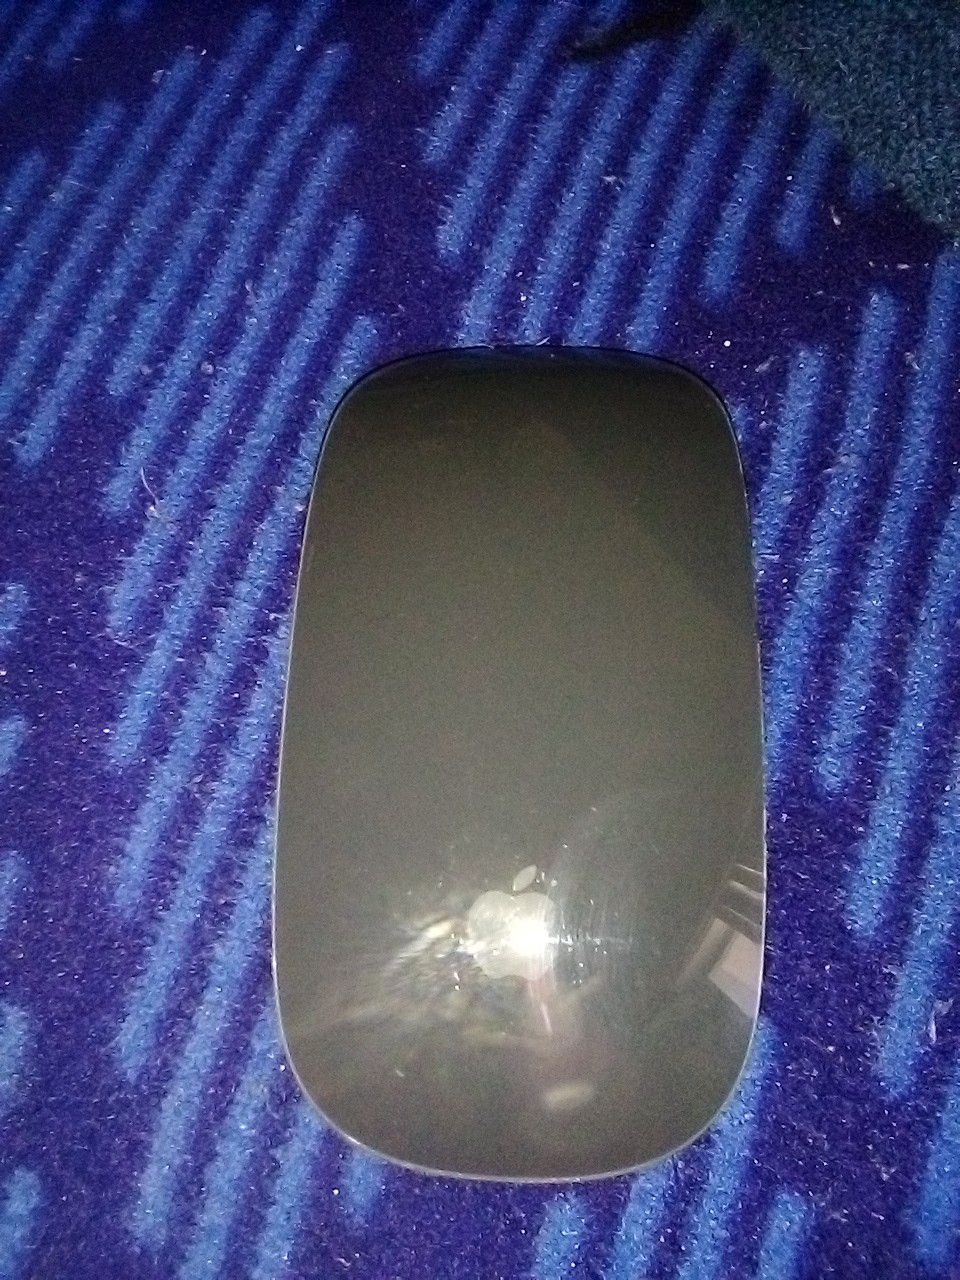 Apple smart mouse 2